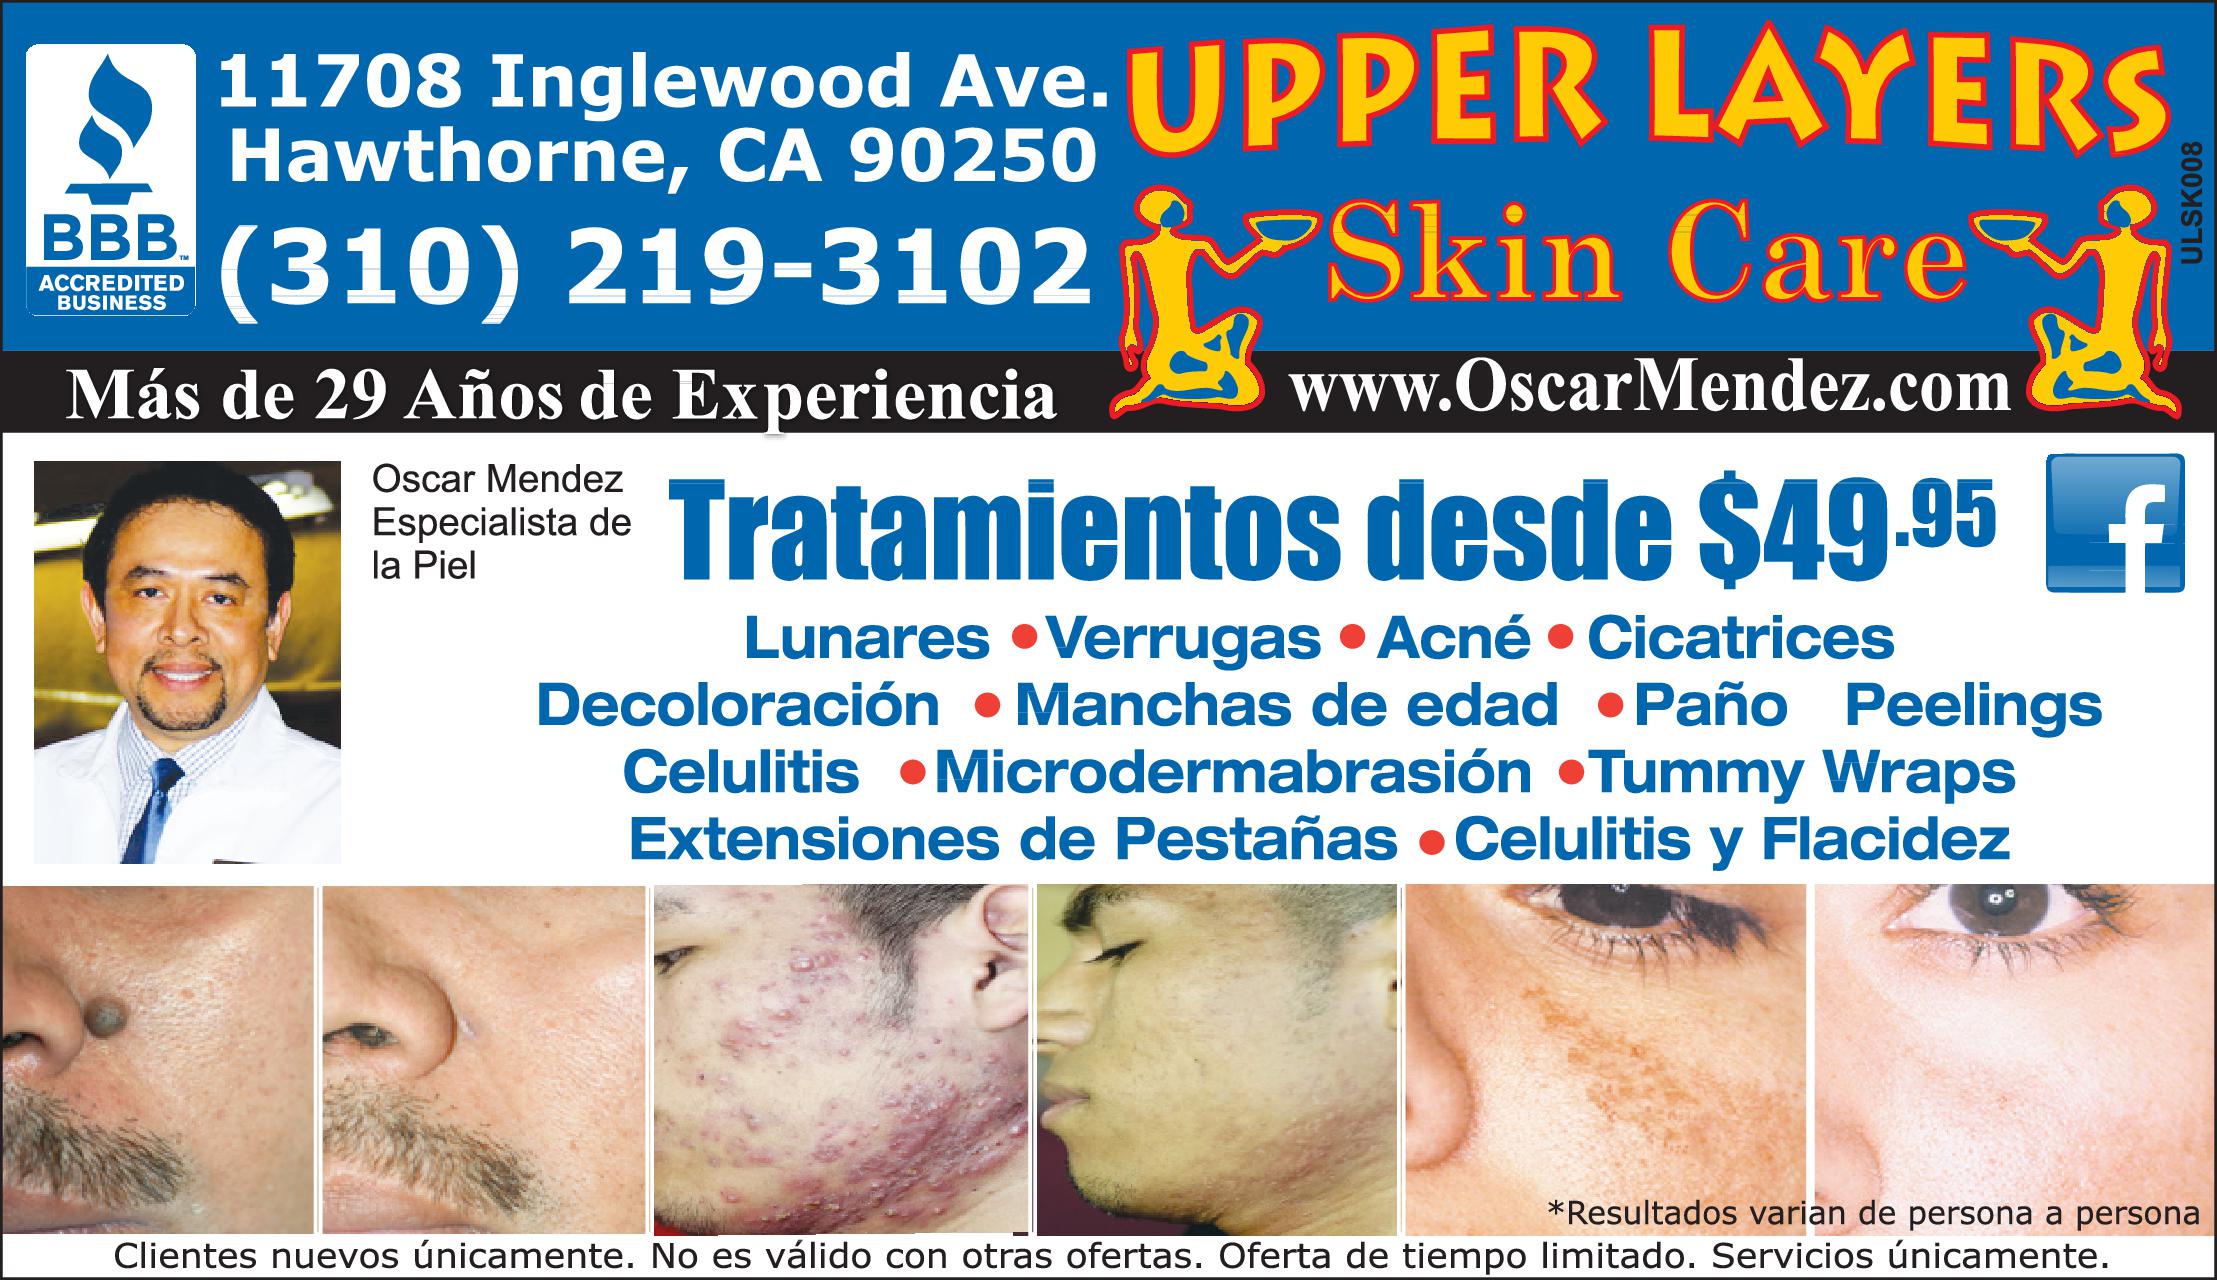 Upper Layers Skin Care